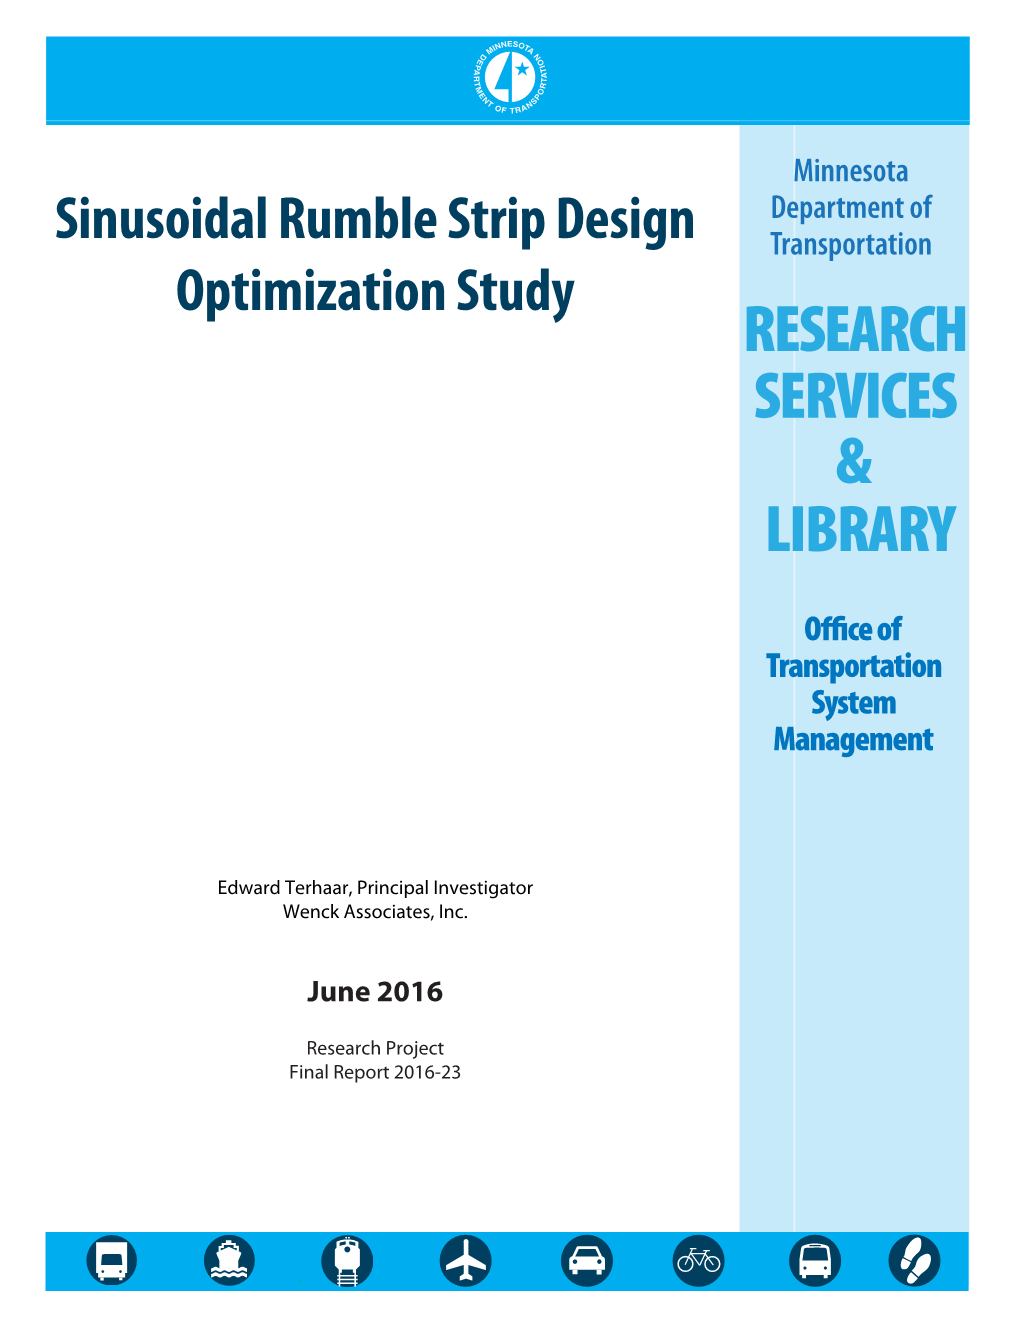 Sinusoidal Rumble Strip Design Optimization Study